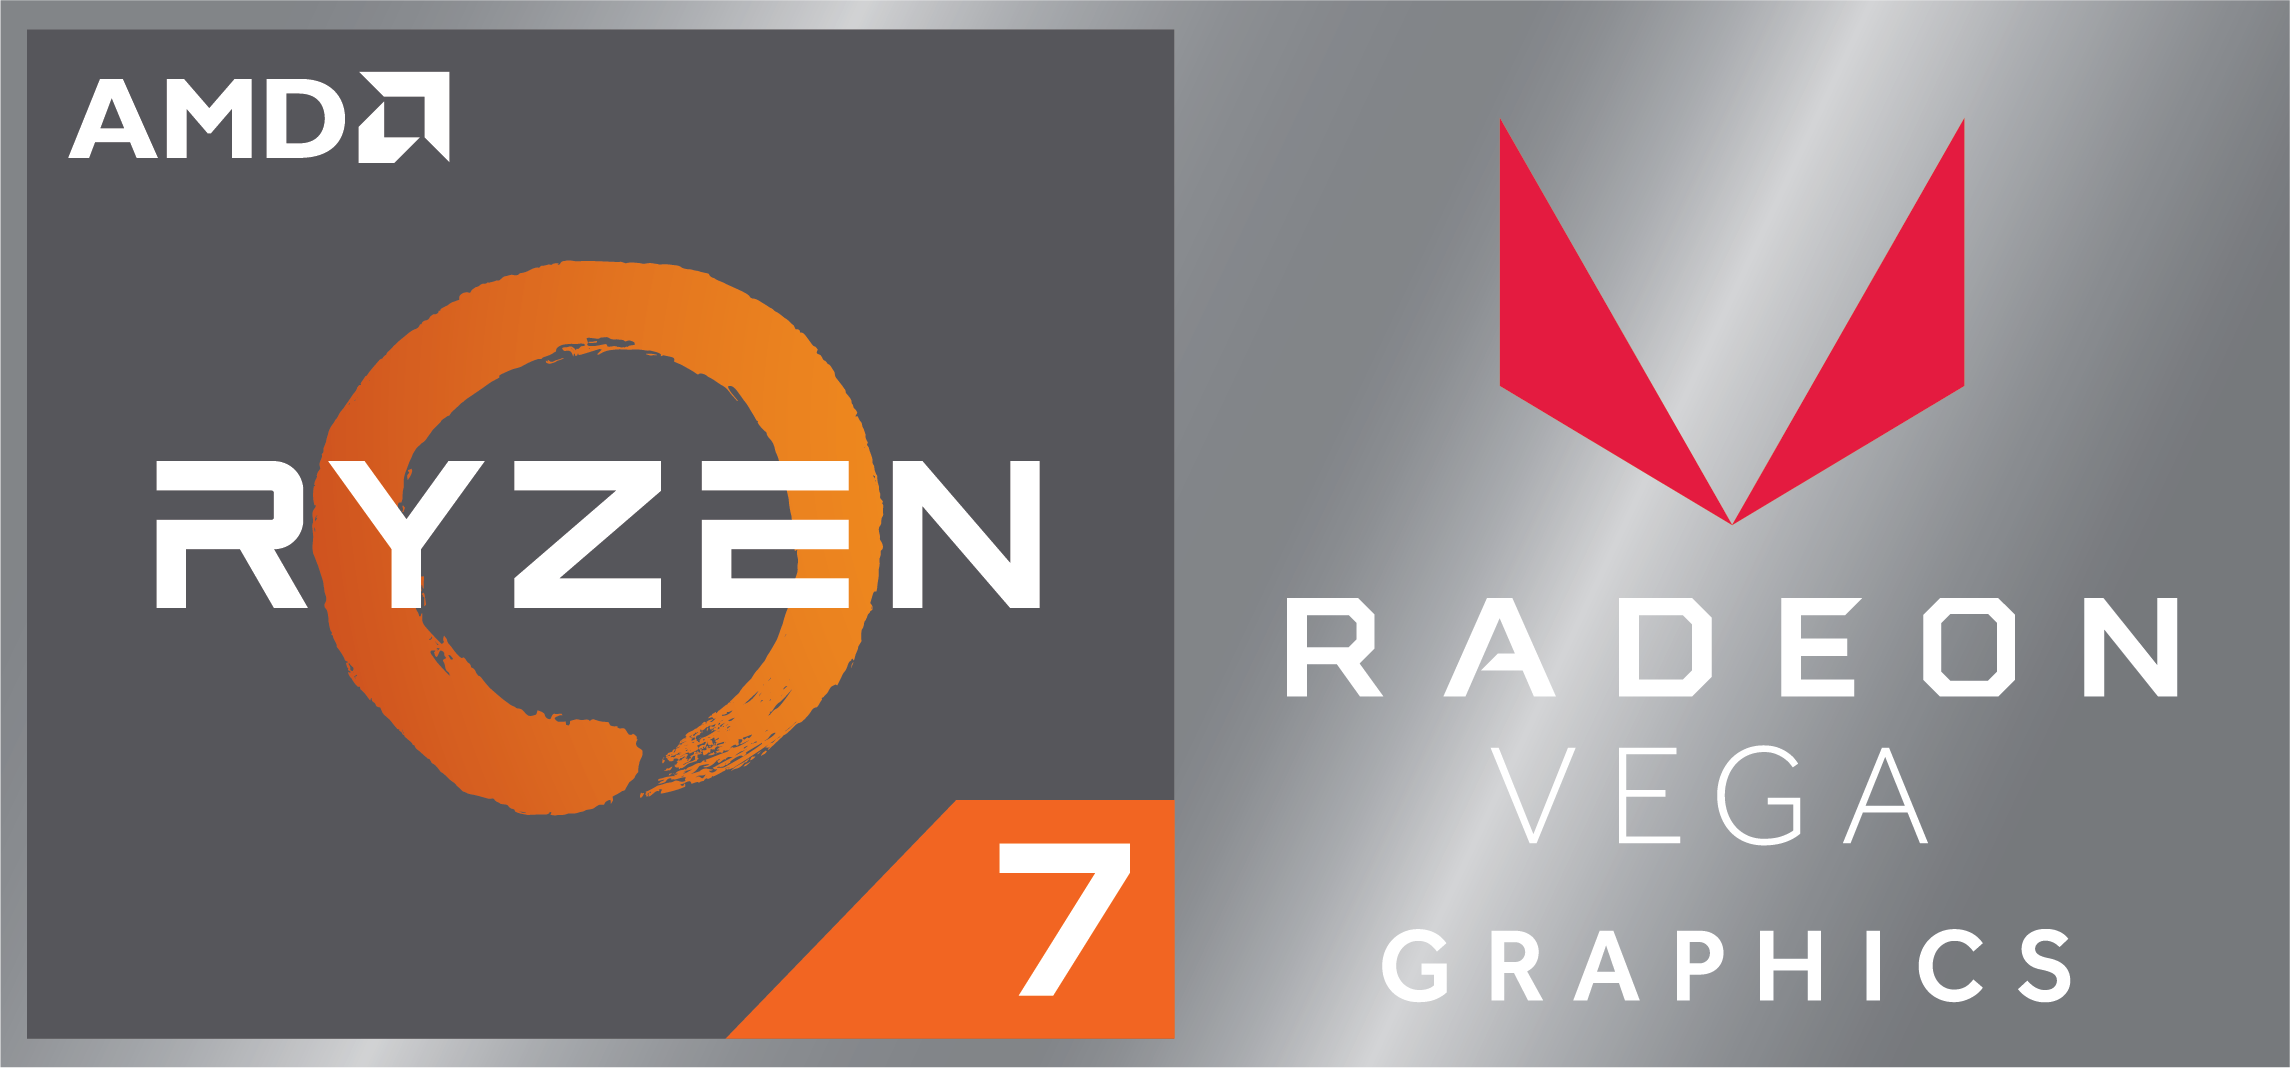 1758251 ryzen7 radonvega digbadge 7 AMD เปิดตัว Ryzen Mobile โปรเซสเซอร์ใหม่ที่เป็นขุมพลังสำหรับ Ultrathin Notebook1 ที่เร็วที่สุดในโลก